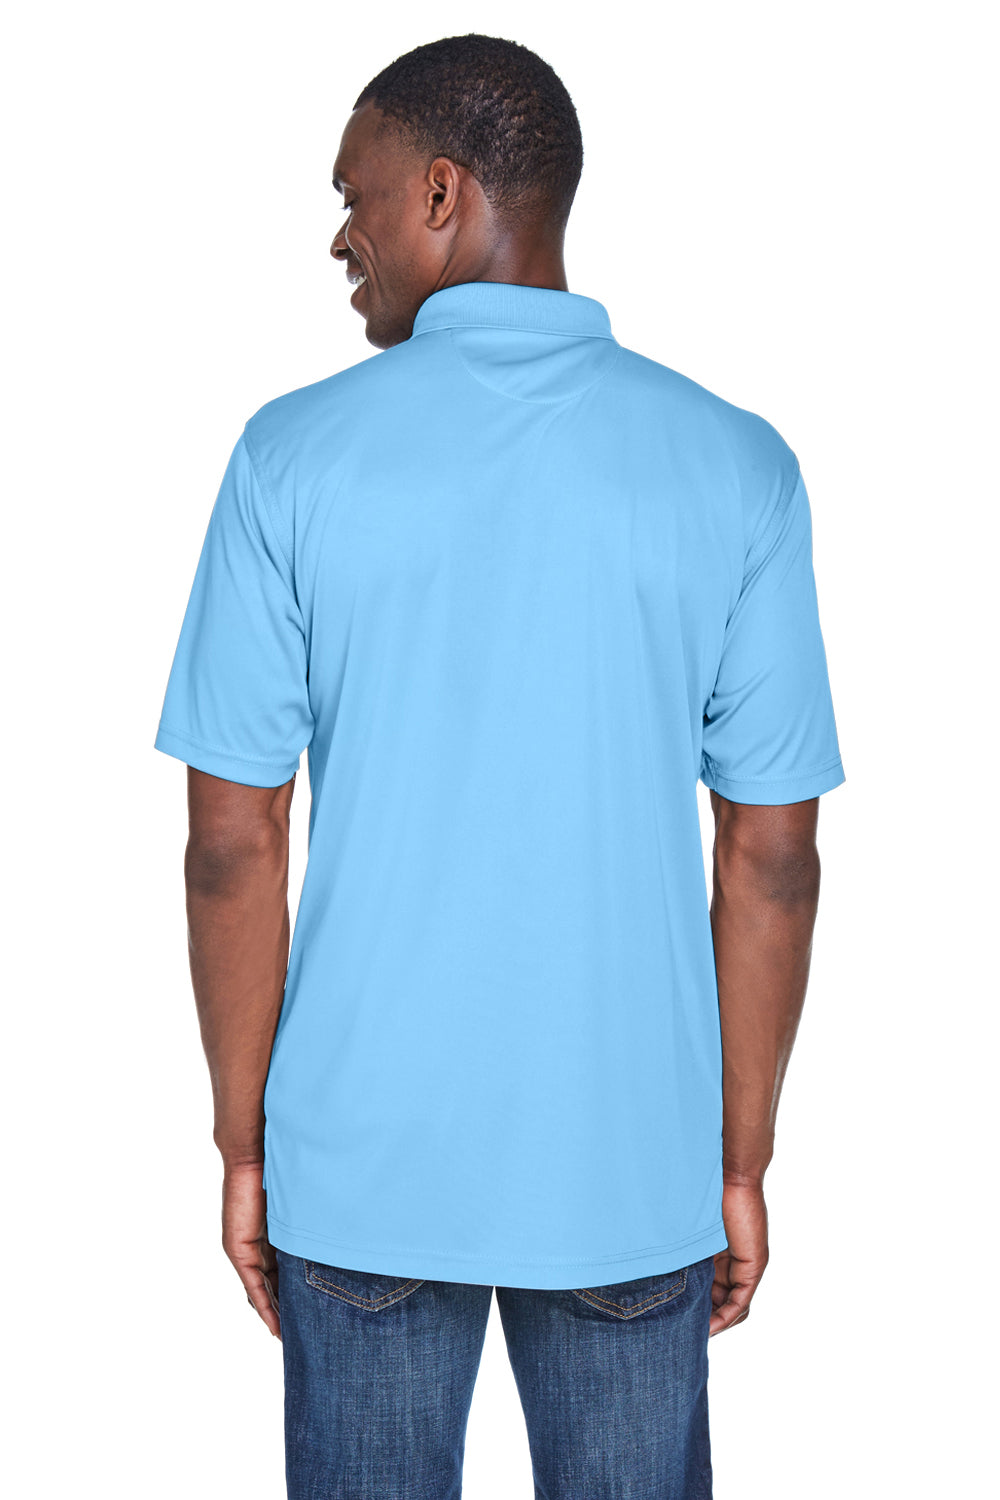 UltraClub 8425 Mens Cool & Dry Performance Moisture Wicking Short Sleeve Polo Shirt Columbia Blue Back